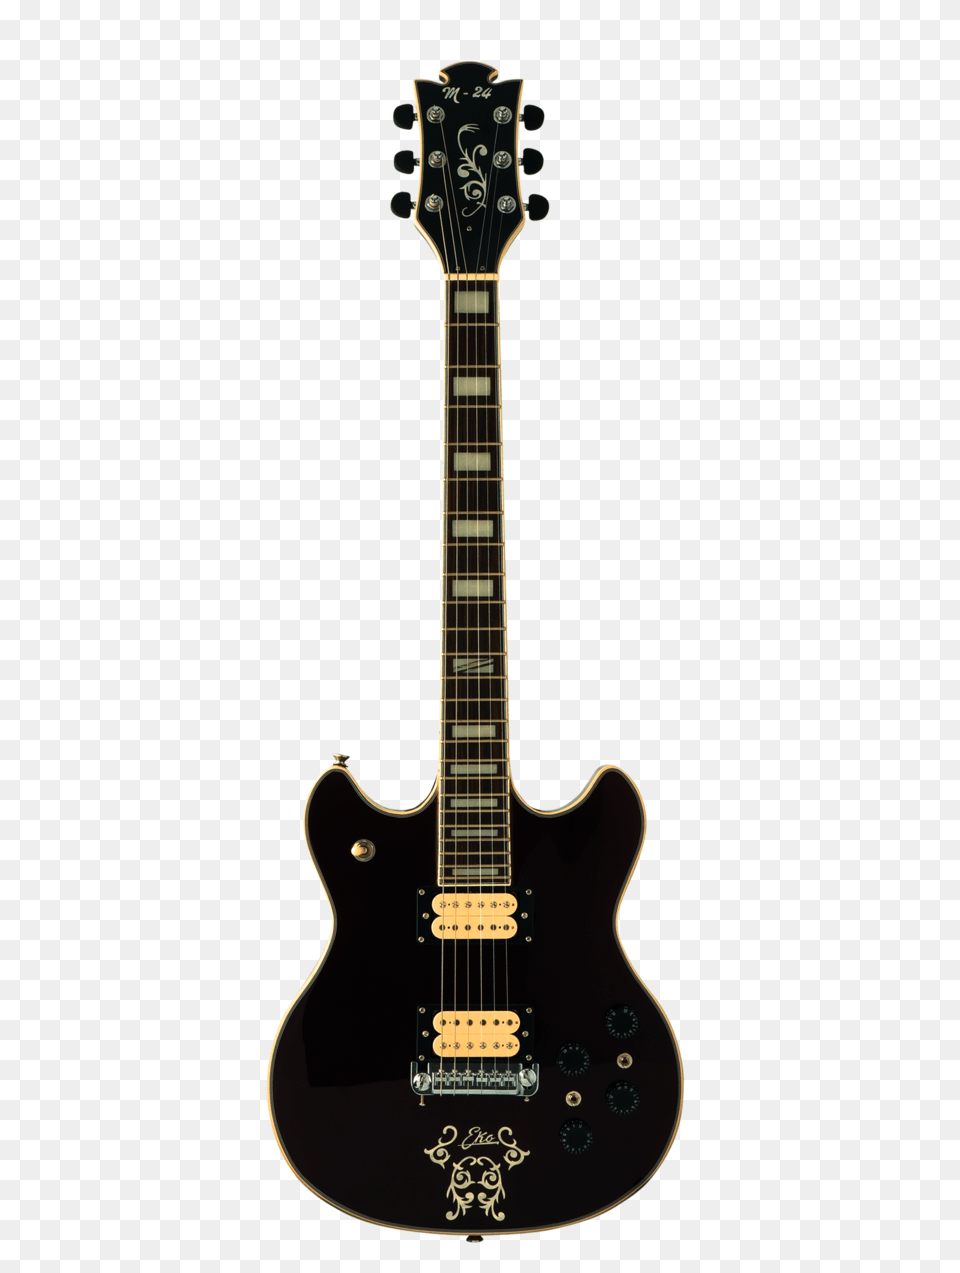 2 Guitar Image, Electric Guitar, Musical Instrument Png